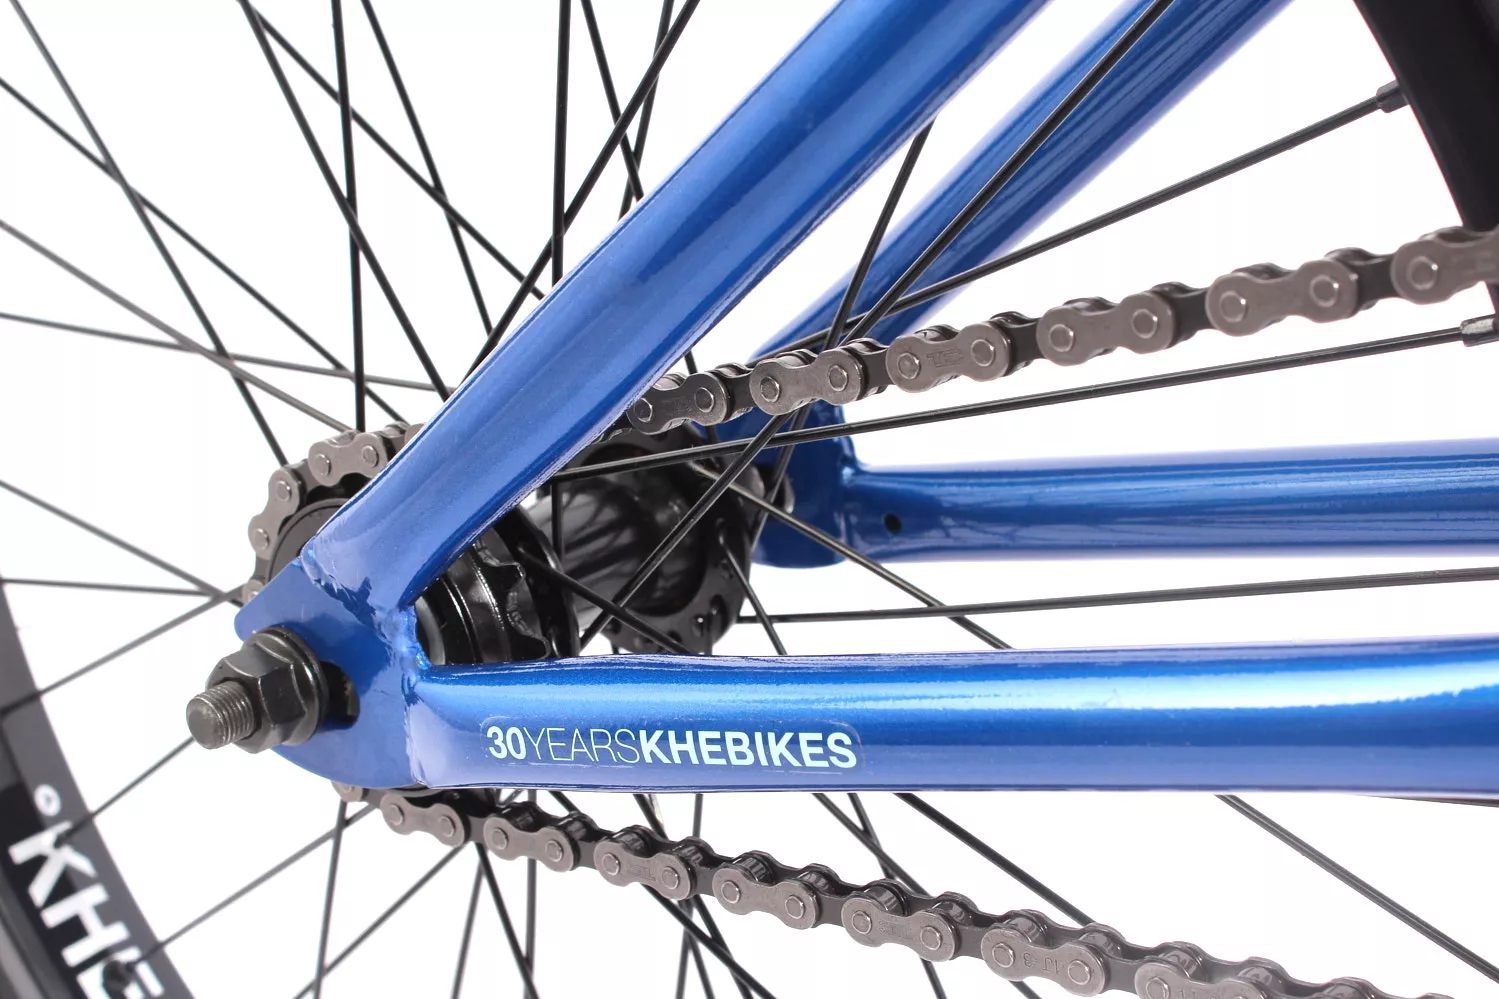 BMX bike KHE COSMIC 20 inch 11.1kg blue